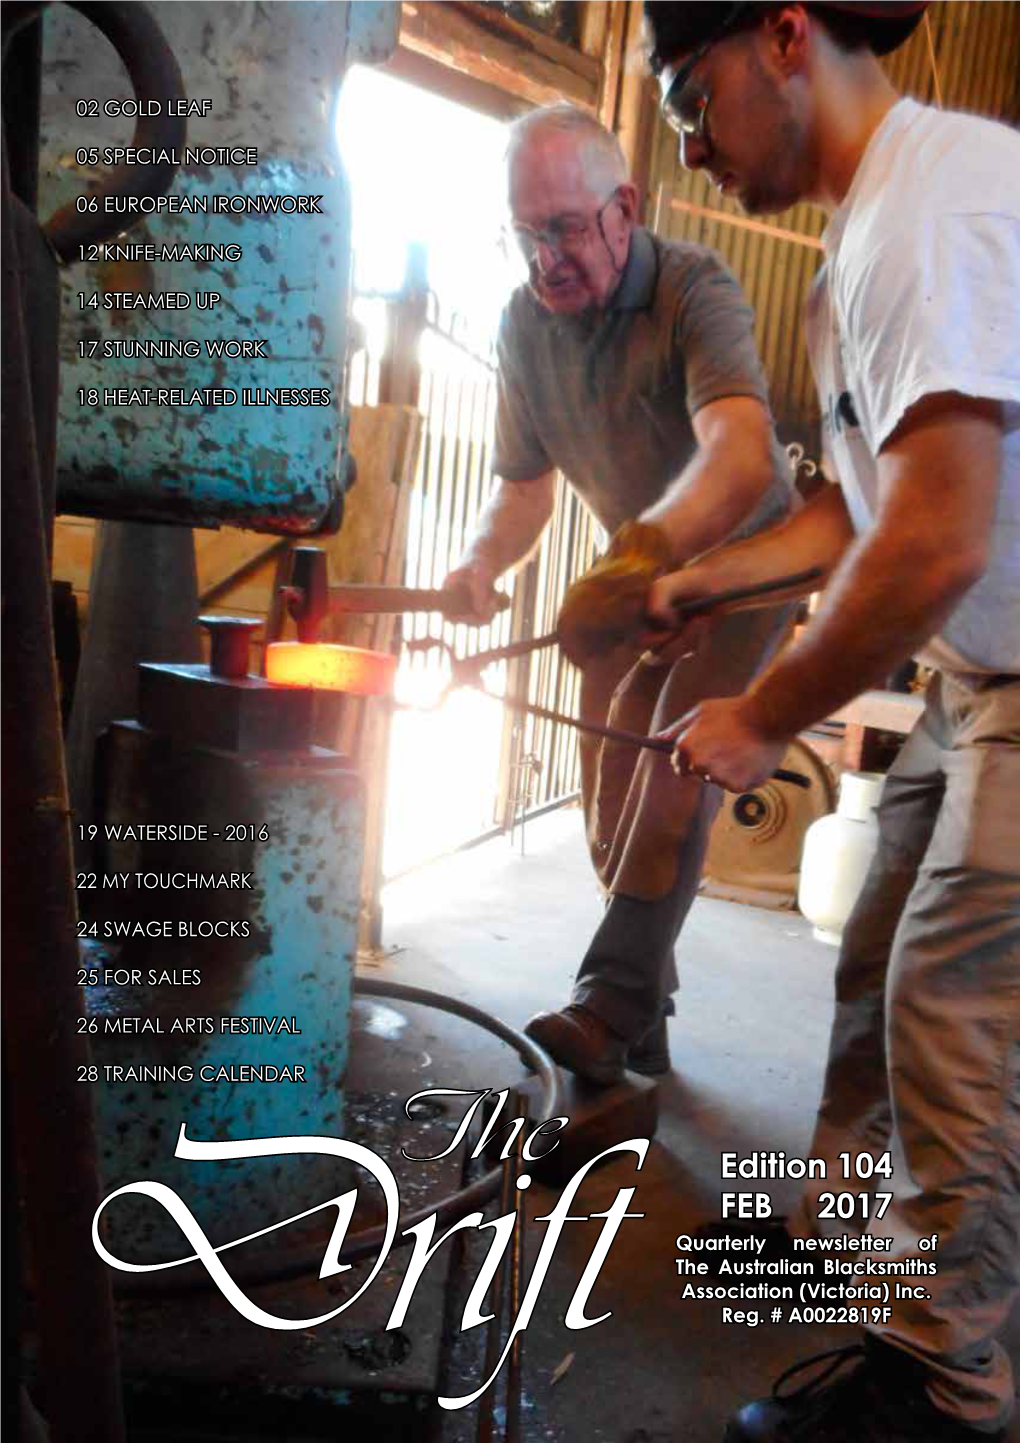 Edition 104 FEB 2017 Quarterly Newsletter of the Australian Blacksmiths Association (Victoria) Inc